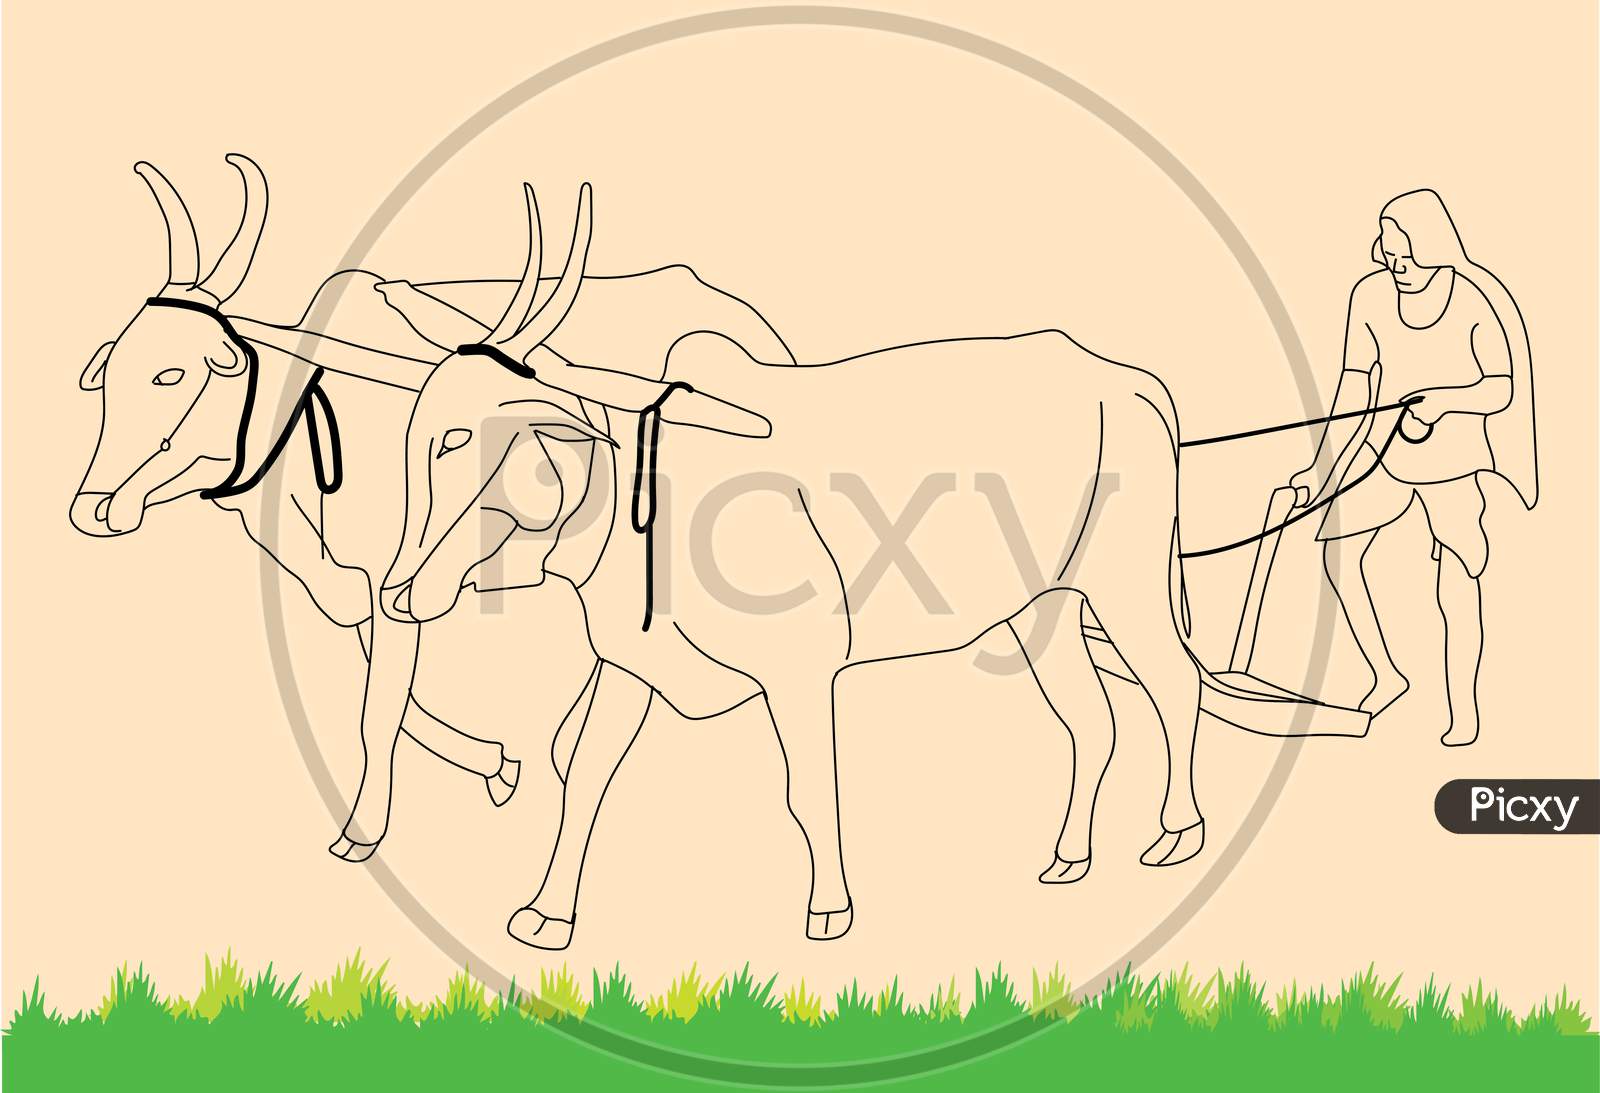 Karnataka Farmers: Over 25 Royalty-Free Licensable Stock Illustrations &  Drawings | Shutterstock